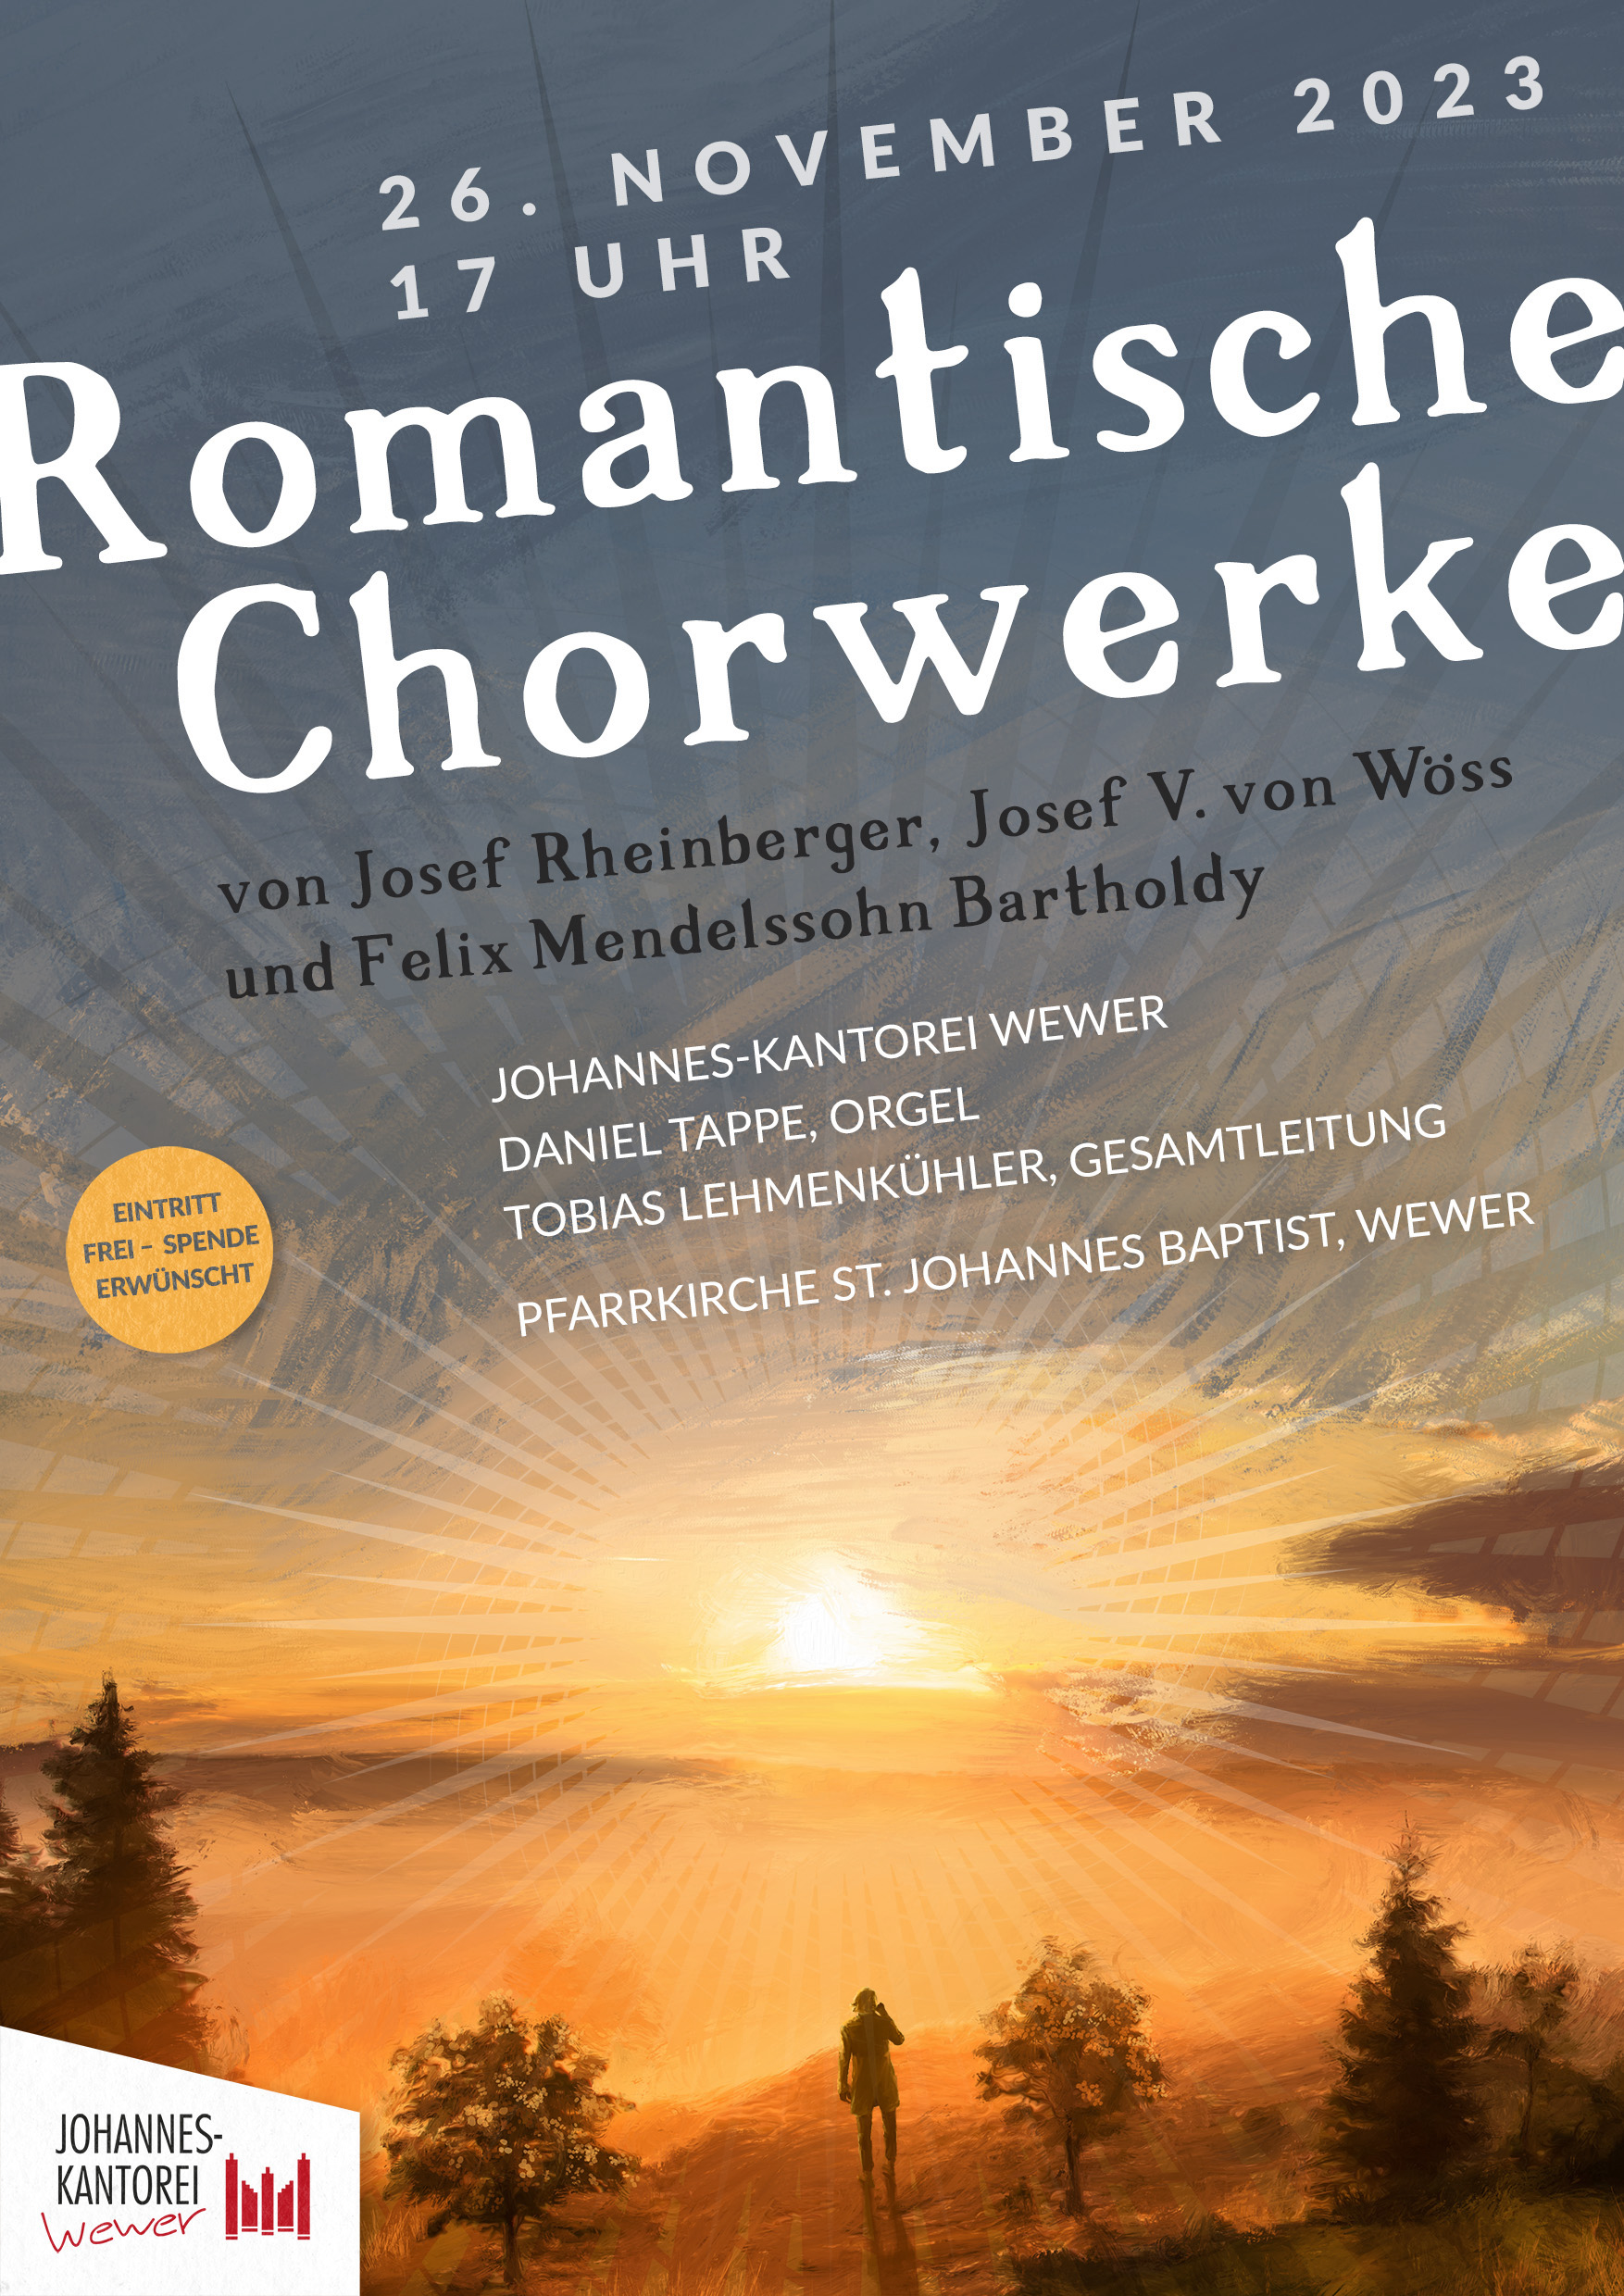 Konzertankündigung Johannes-Kantorei Wewer am 26. November 2023